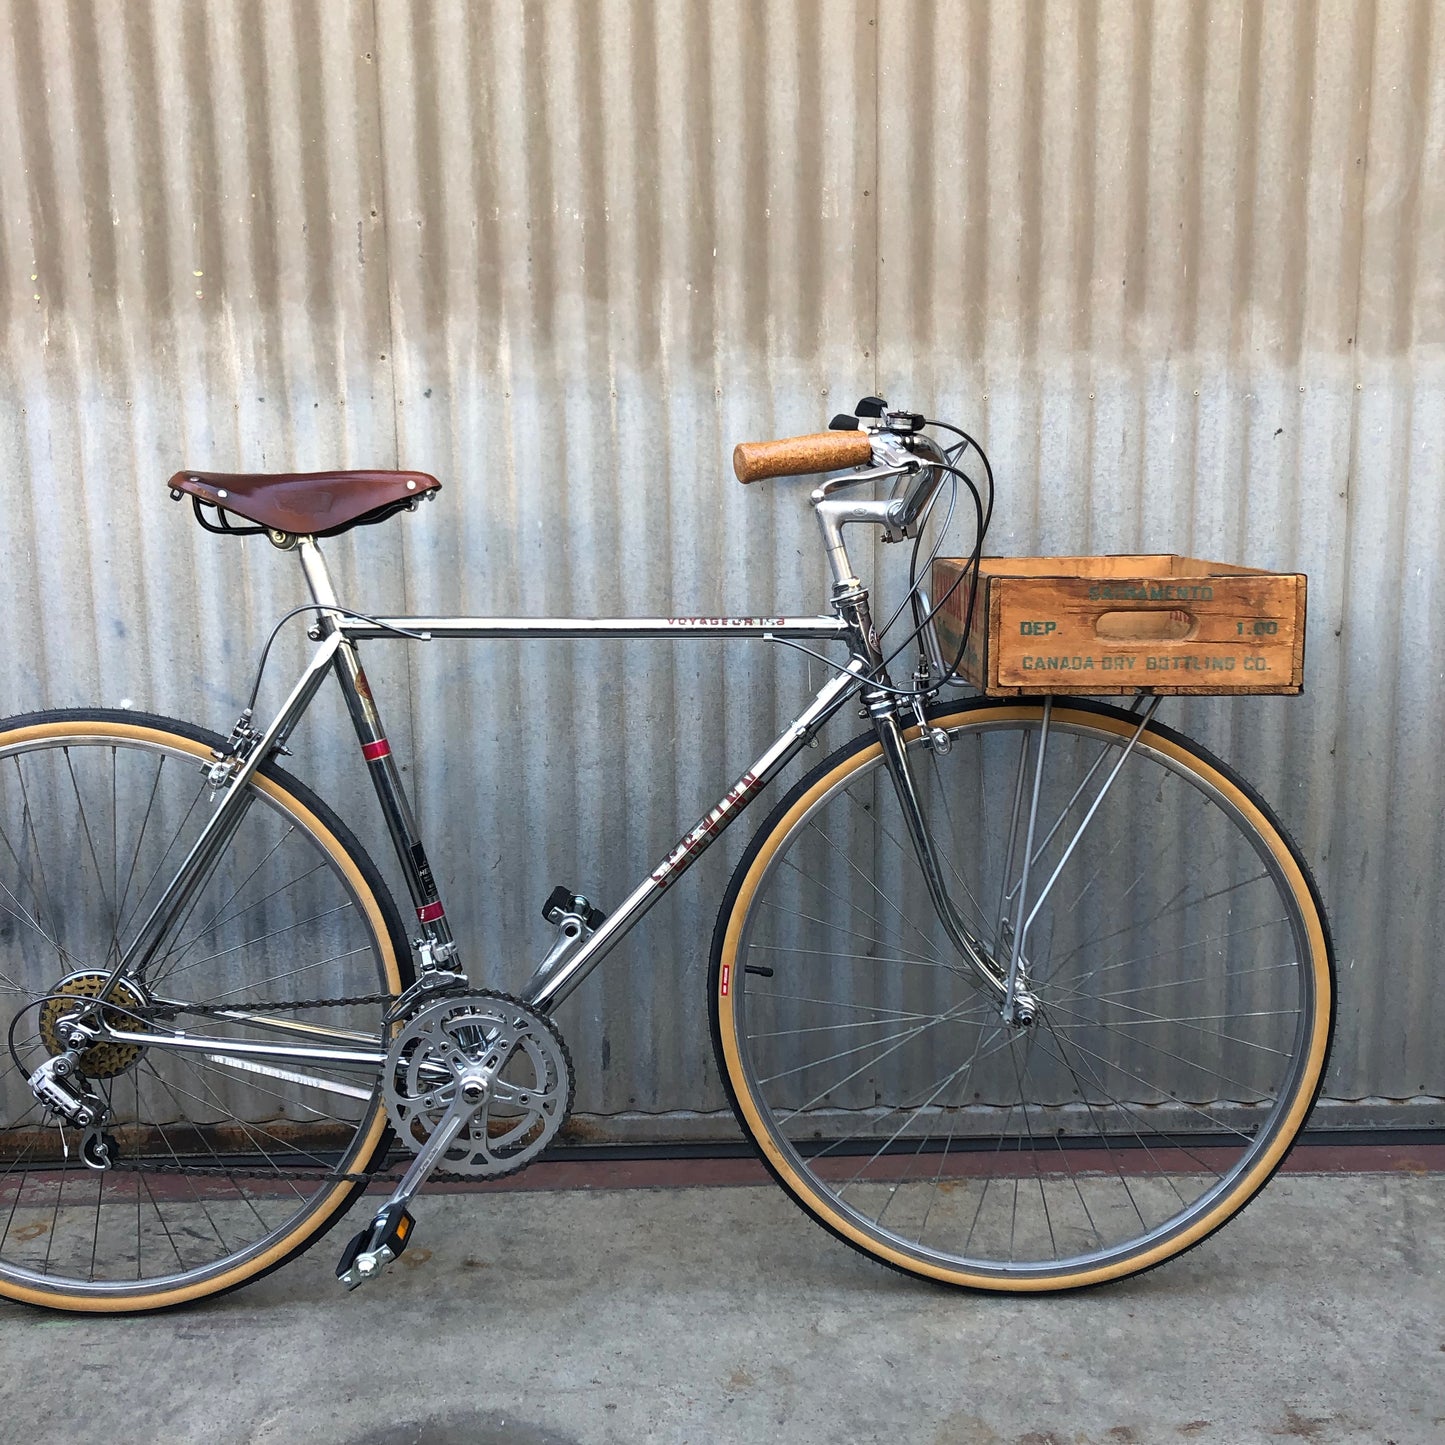 Gentlemen's City Bike - Custom Chrome City Bike - Studio Rental